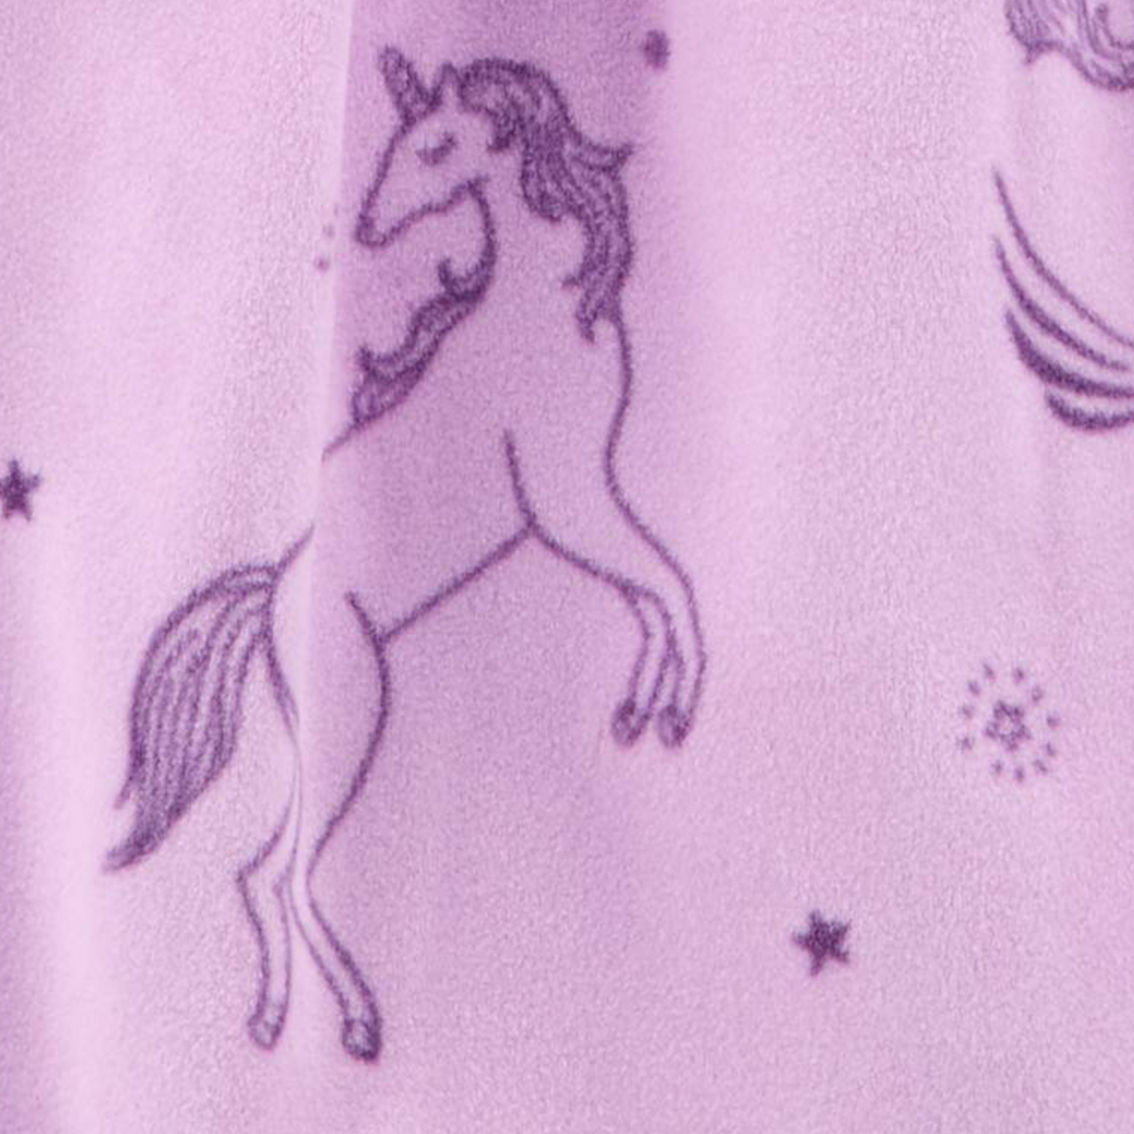 Carter's Little Girls Unicorn Fleece Nightgown - Image 2 of 2